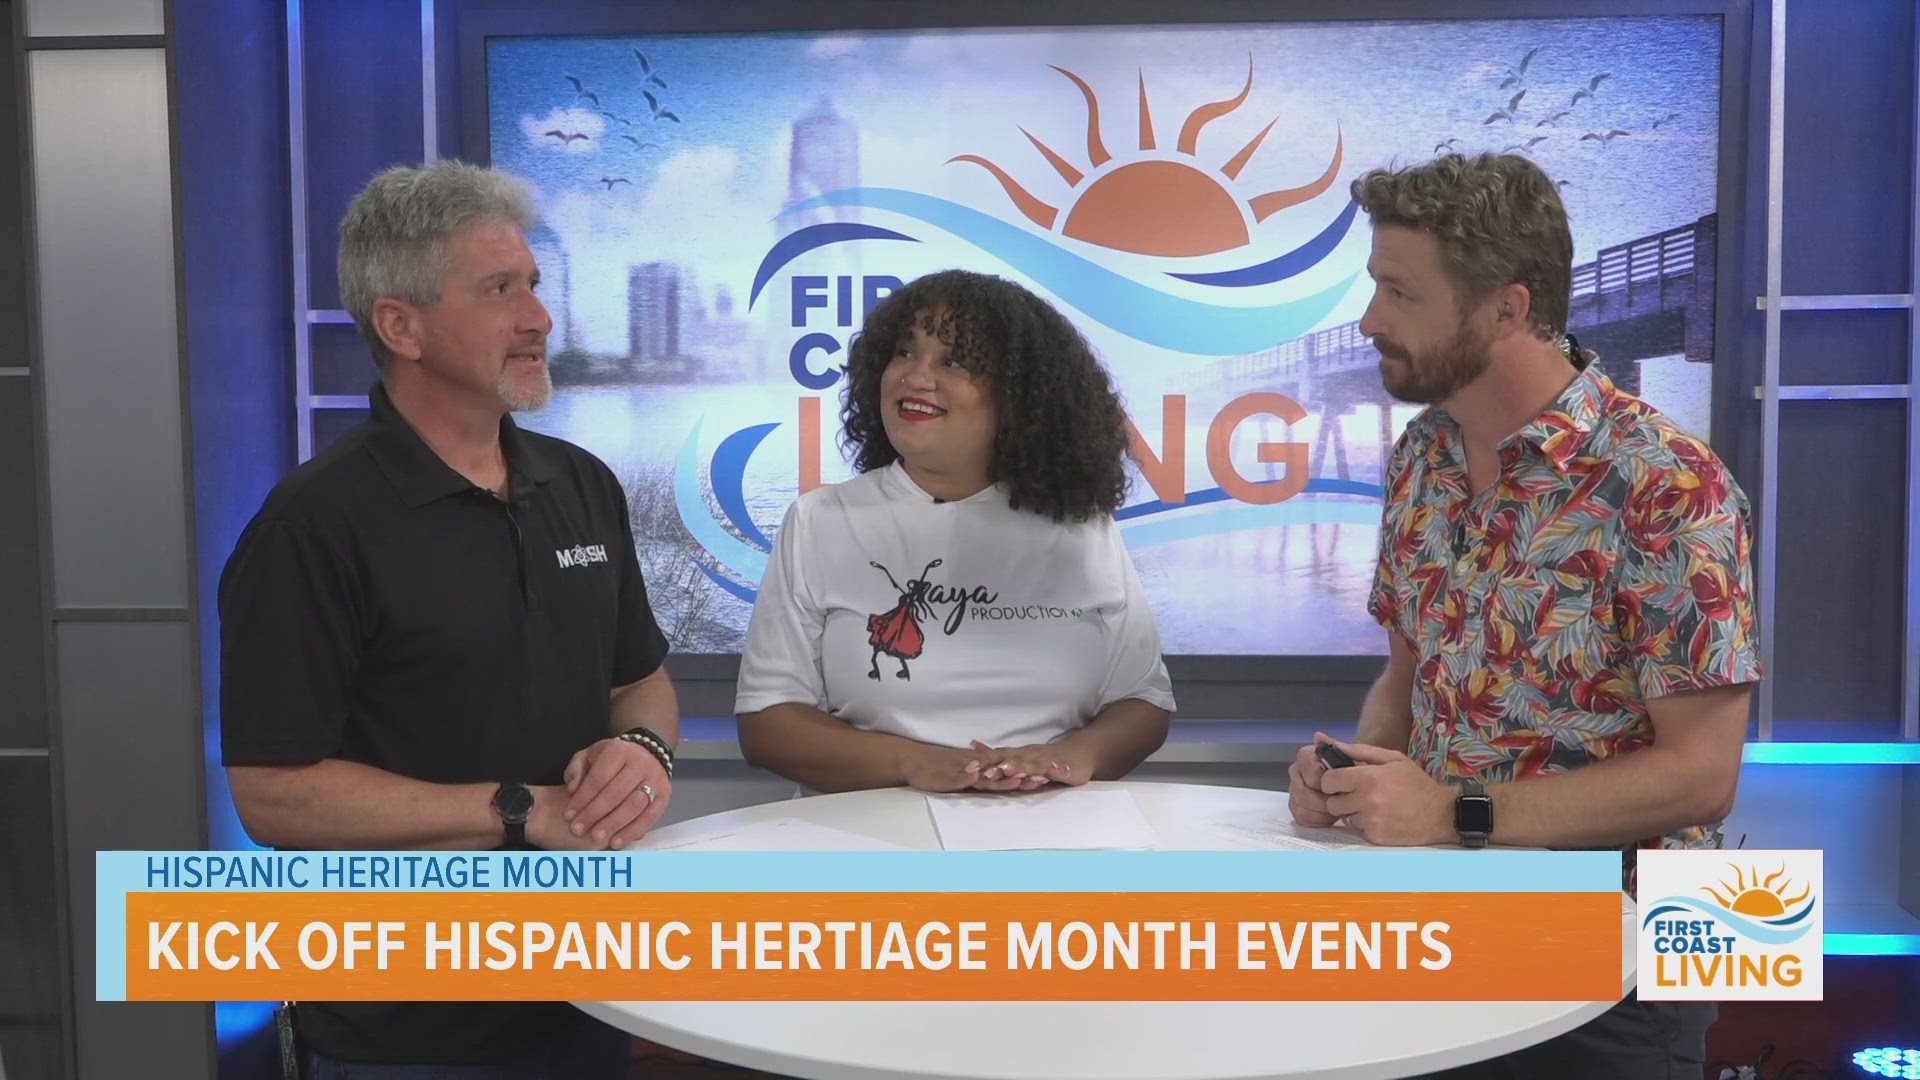 Kicking off Hispanic Heritage Month with Yaya Productions & MOSH